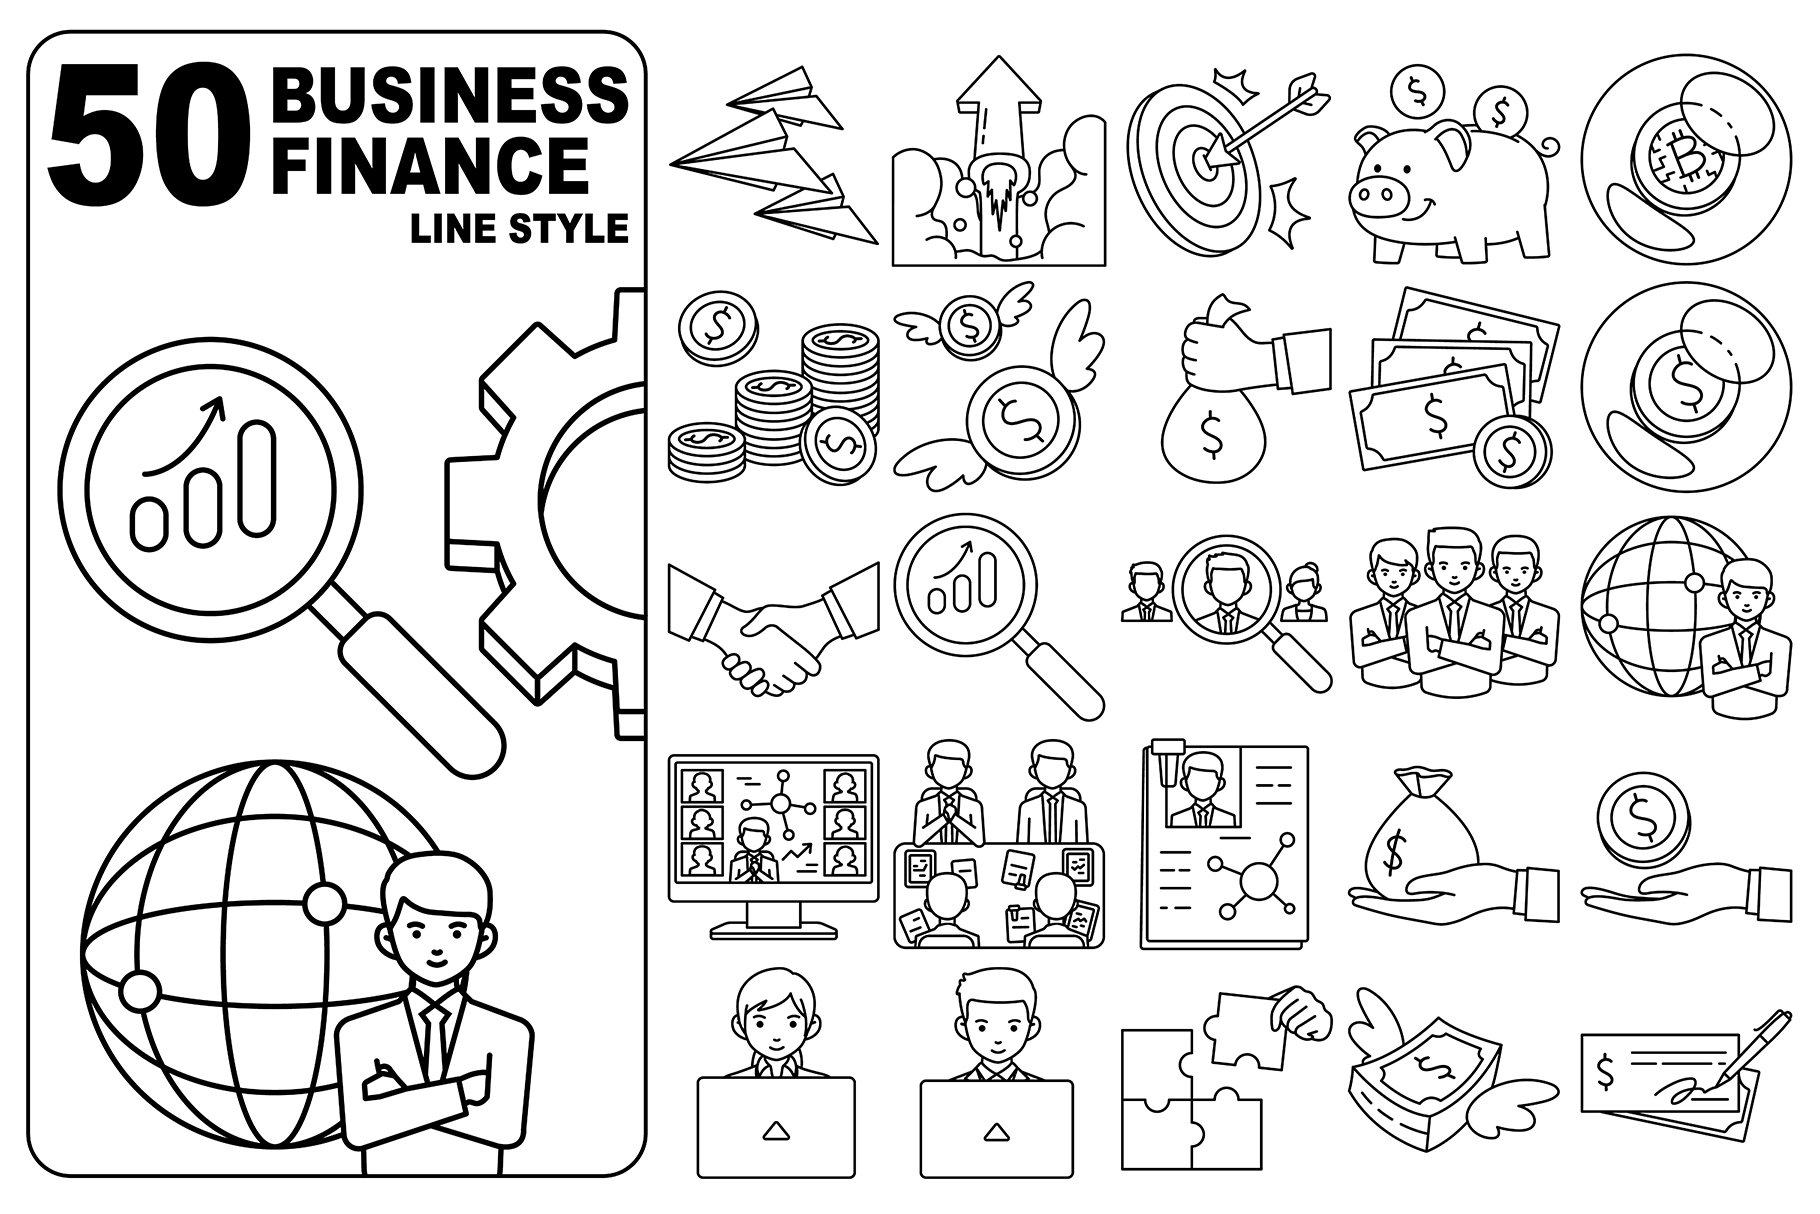 Business Finance Line Set 50 cover image.